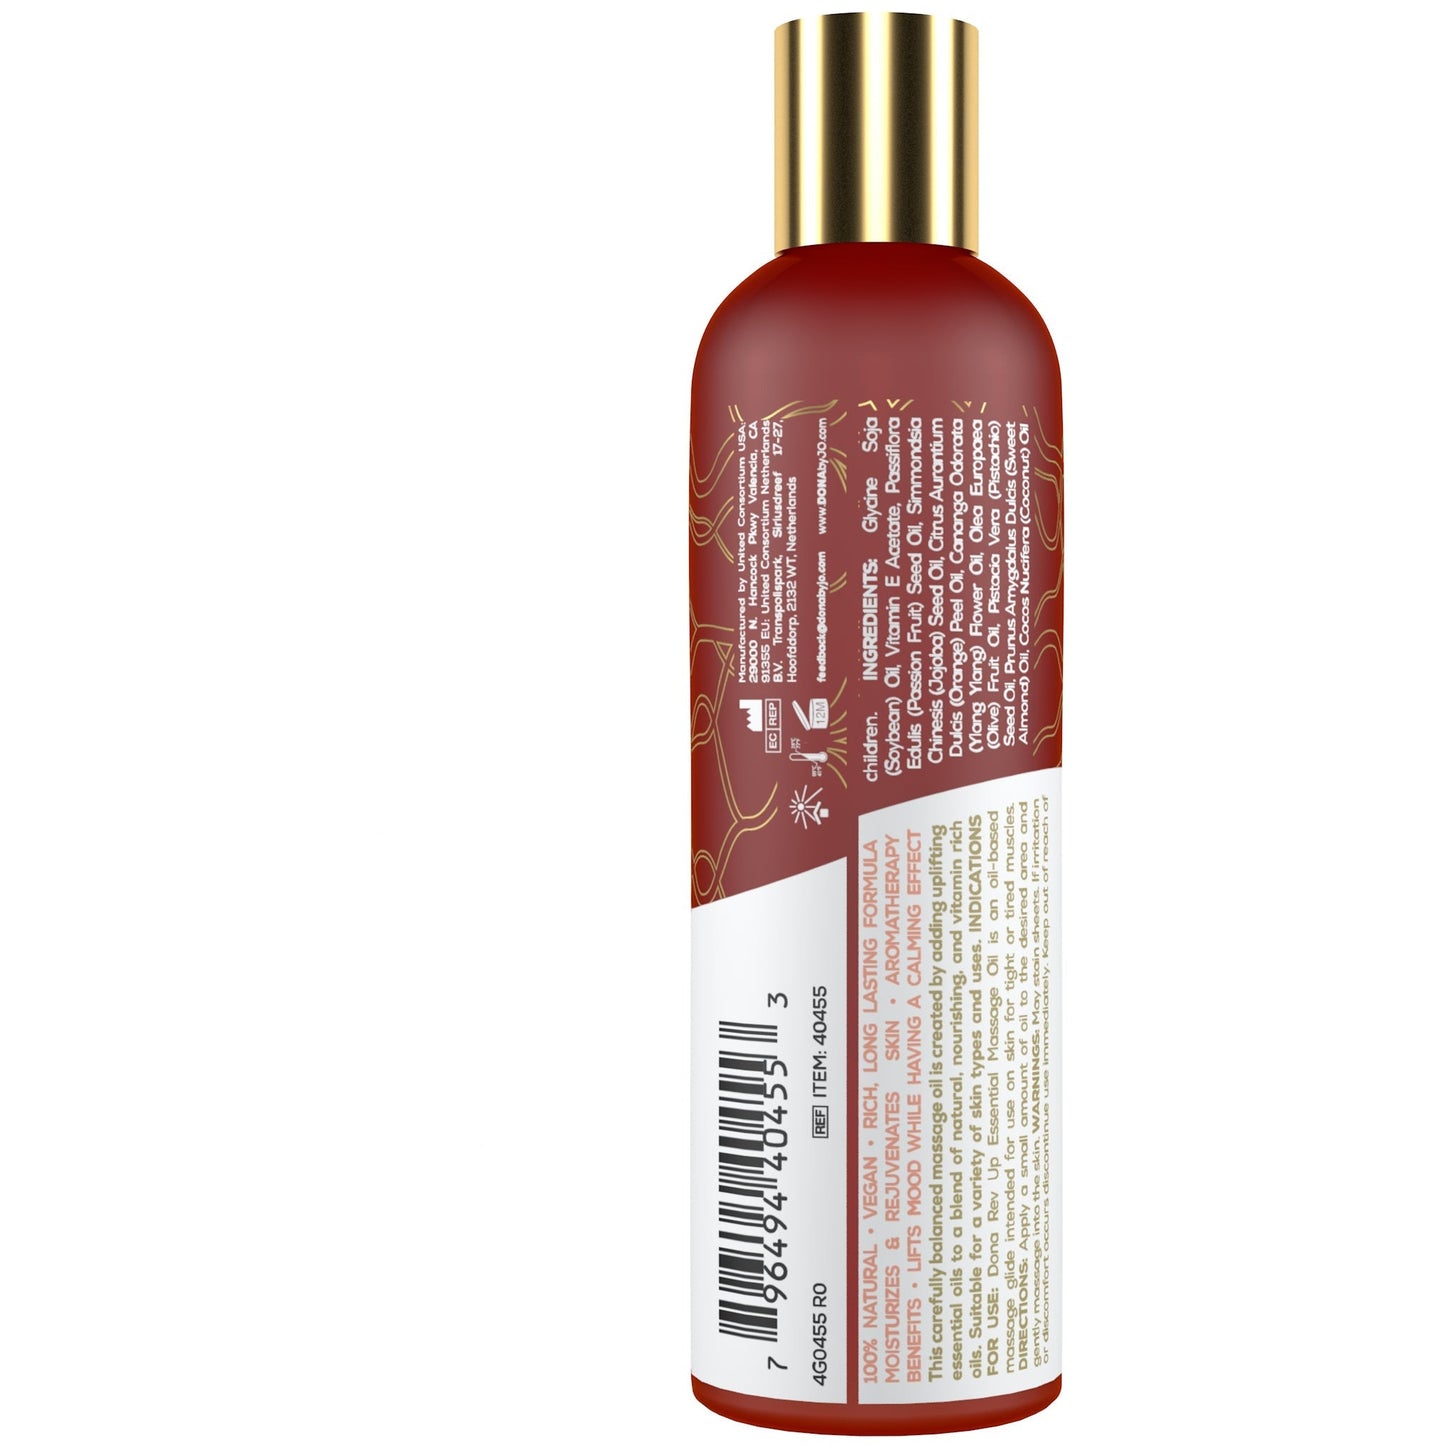 DONA Essential Massage Oil - Rev Up - Mandarin & Ylang Ylang 120 ml